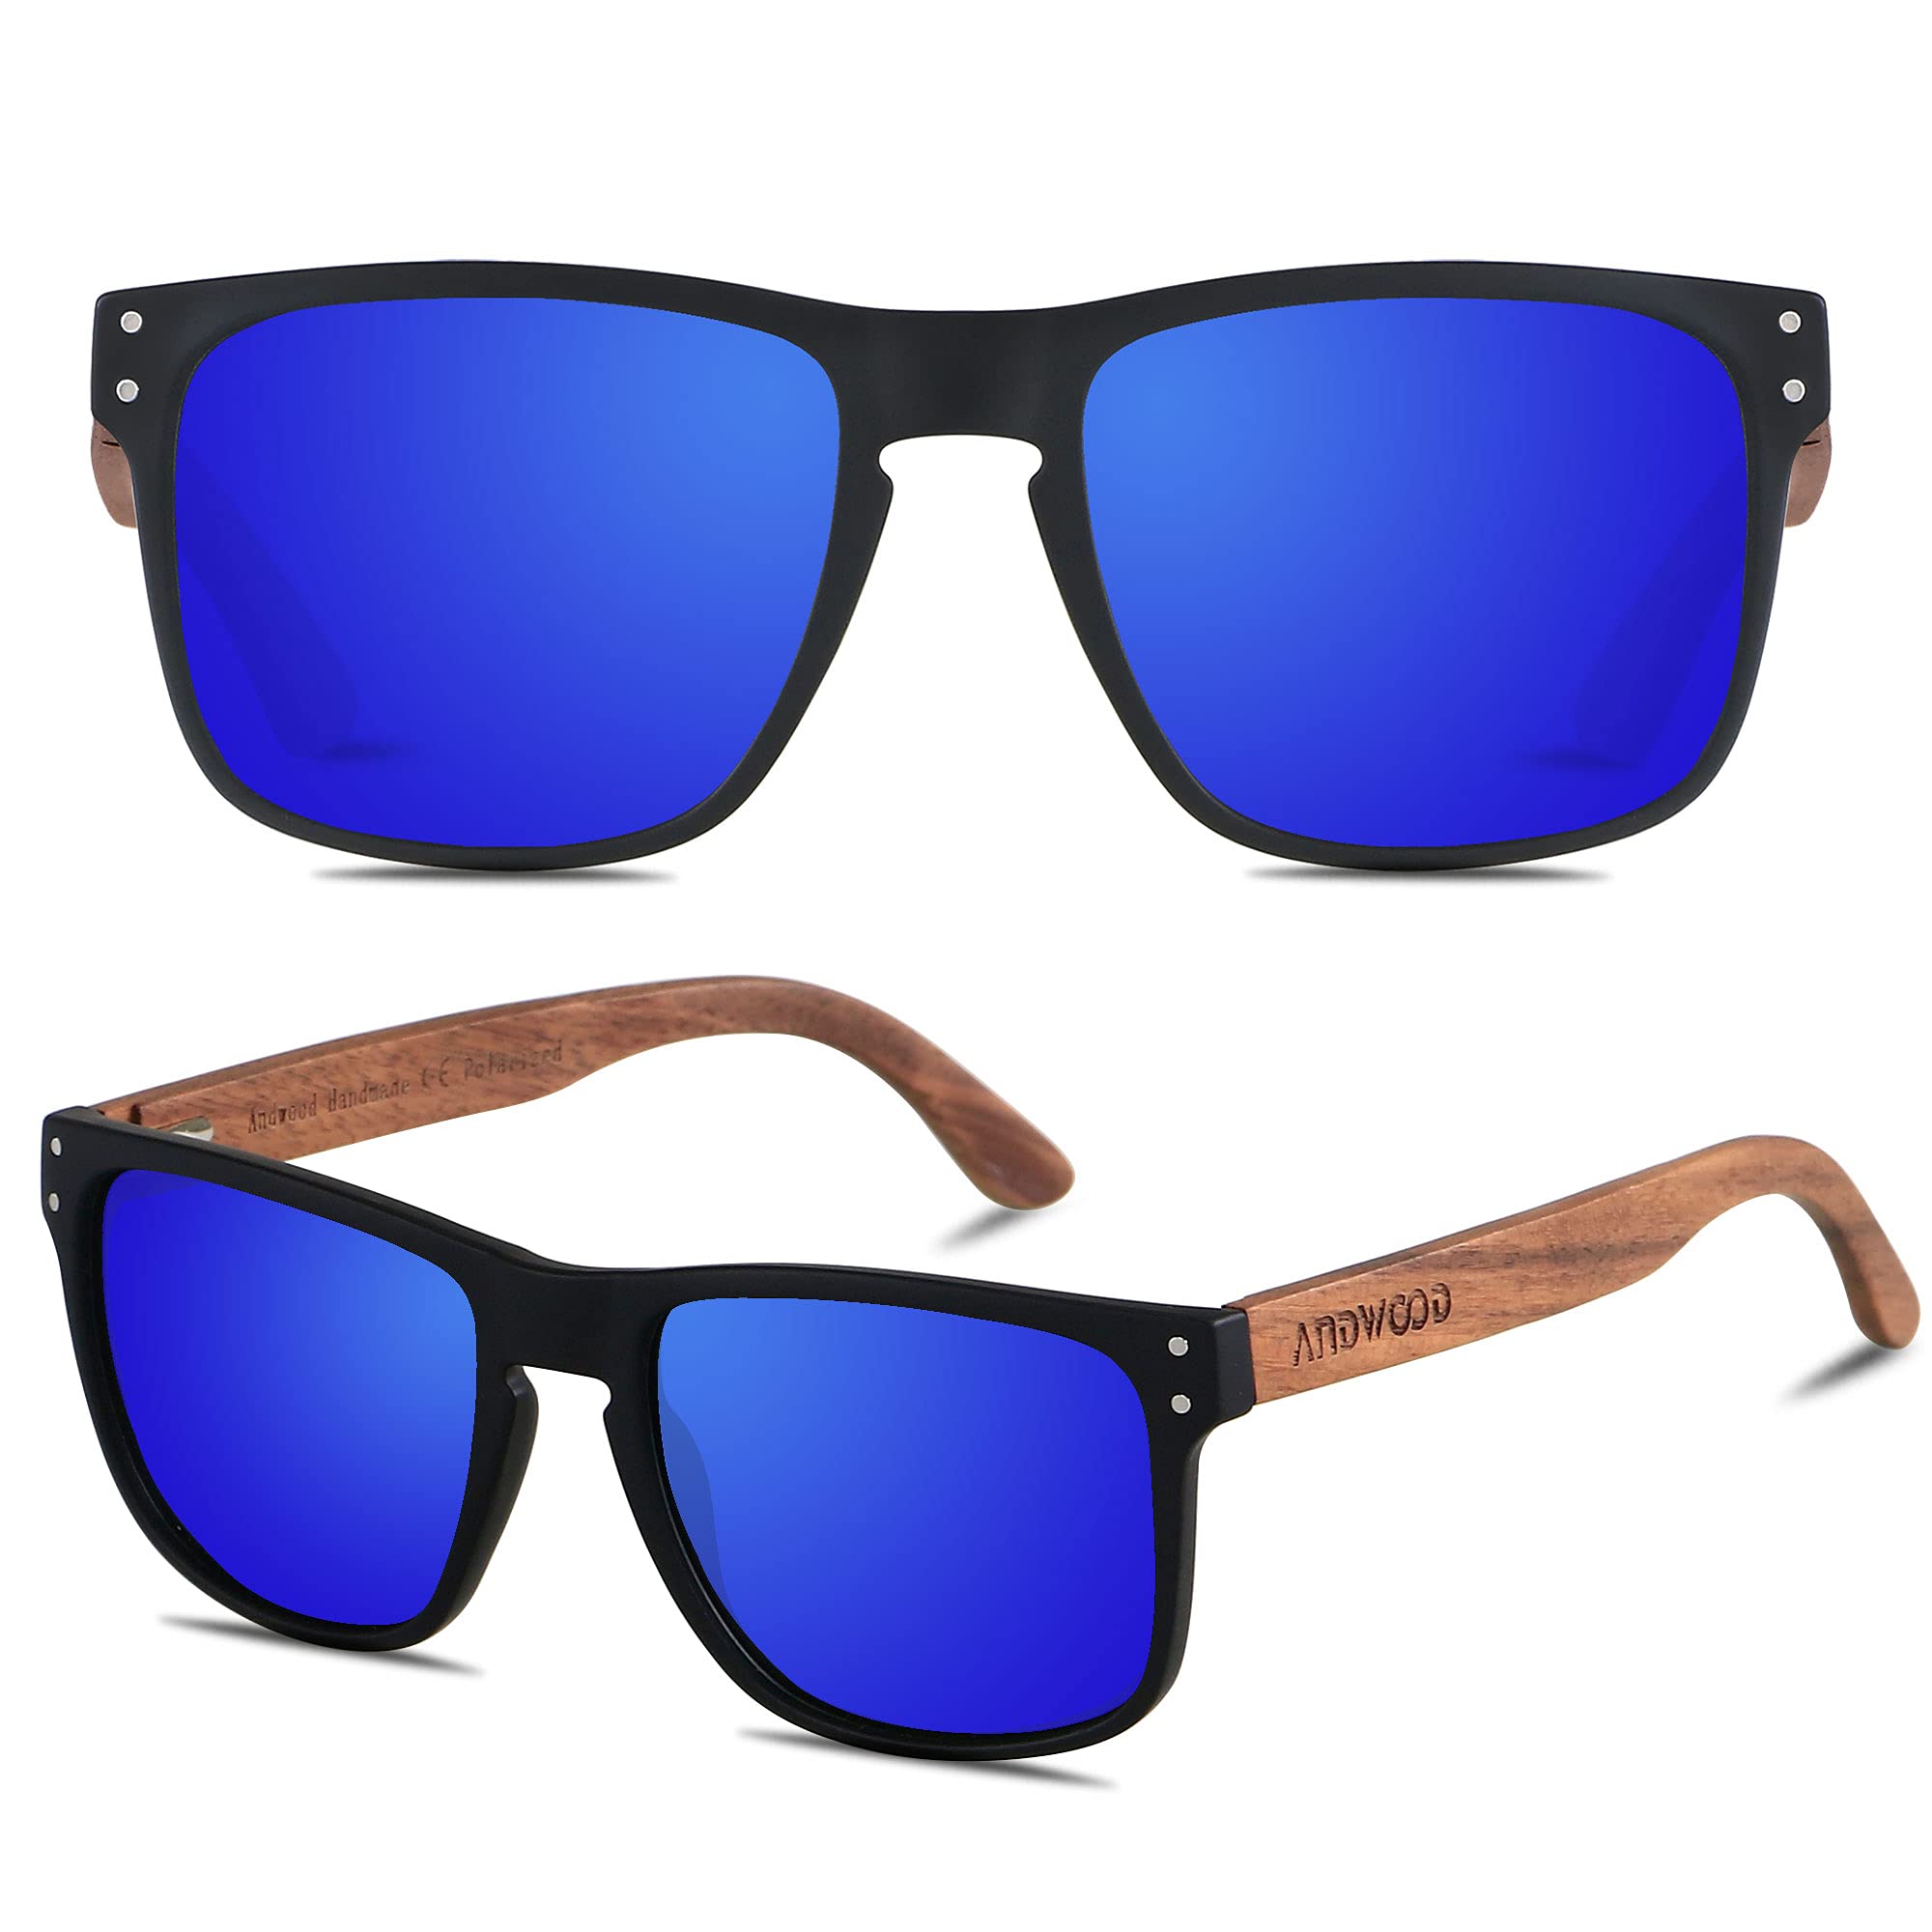 https://cdn.shopify.com/s/files/1/0274/4637/8561/products/awxpro-wooden-frame-polarized-sunglasses-unisex-uv400-natural-wood-design-sunglasses-awxpro-blue-602124.jpg